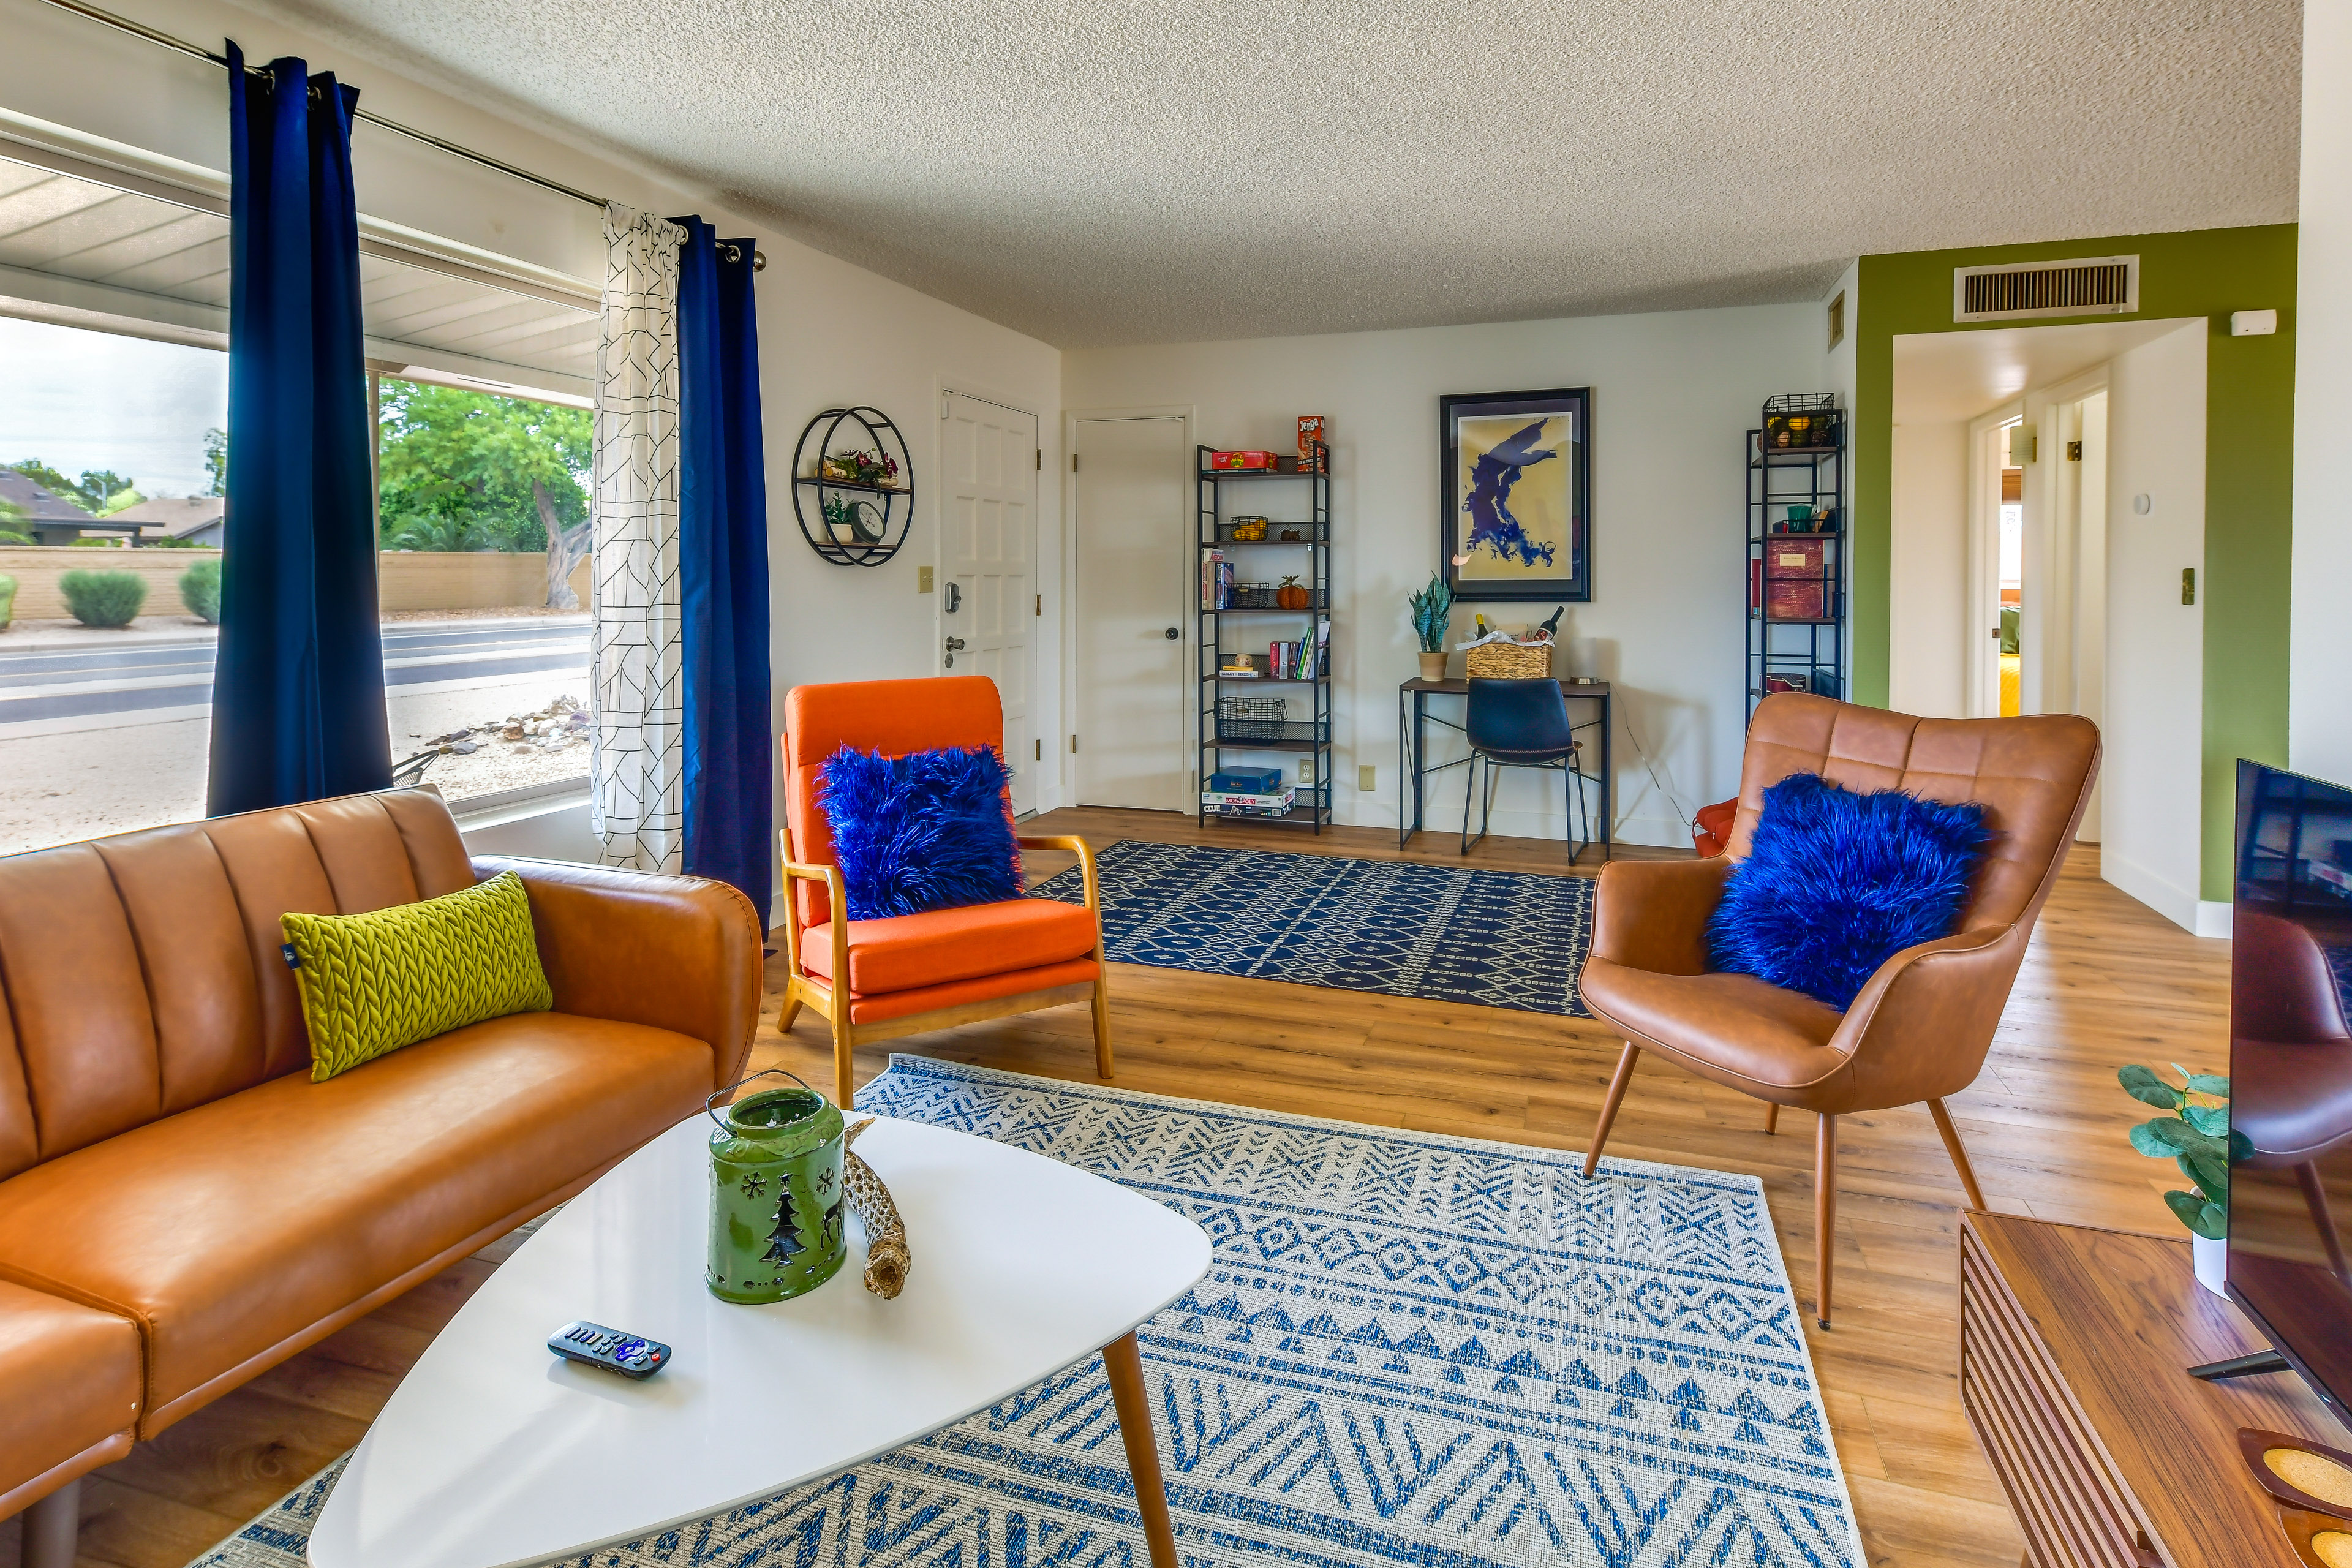 Desert Dreamin: - Home, Airbnb United Houses in States 55 Stylish Mesa, + for - Arizona, Mesa Community! Rent